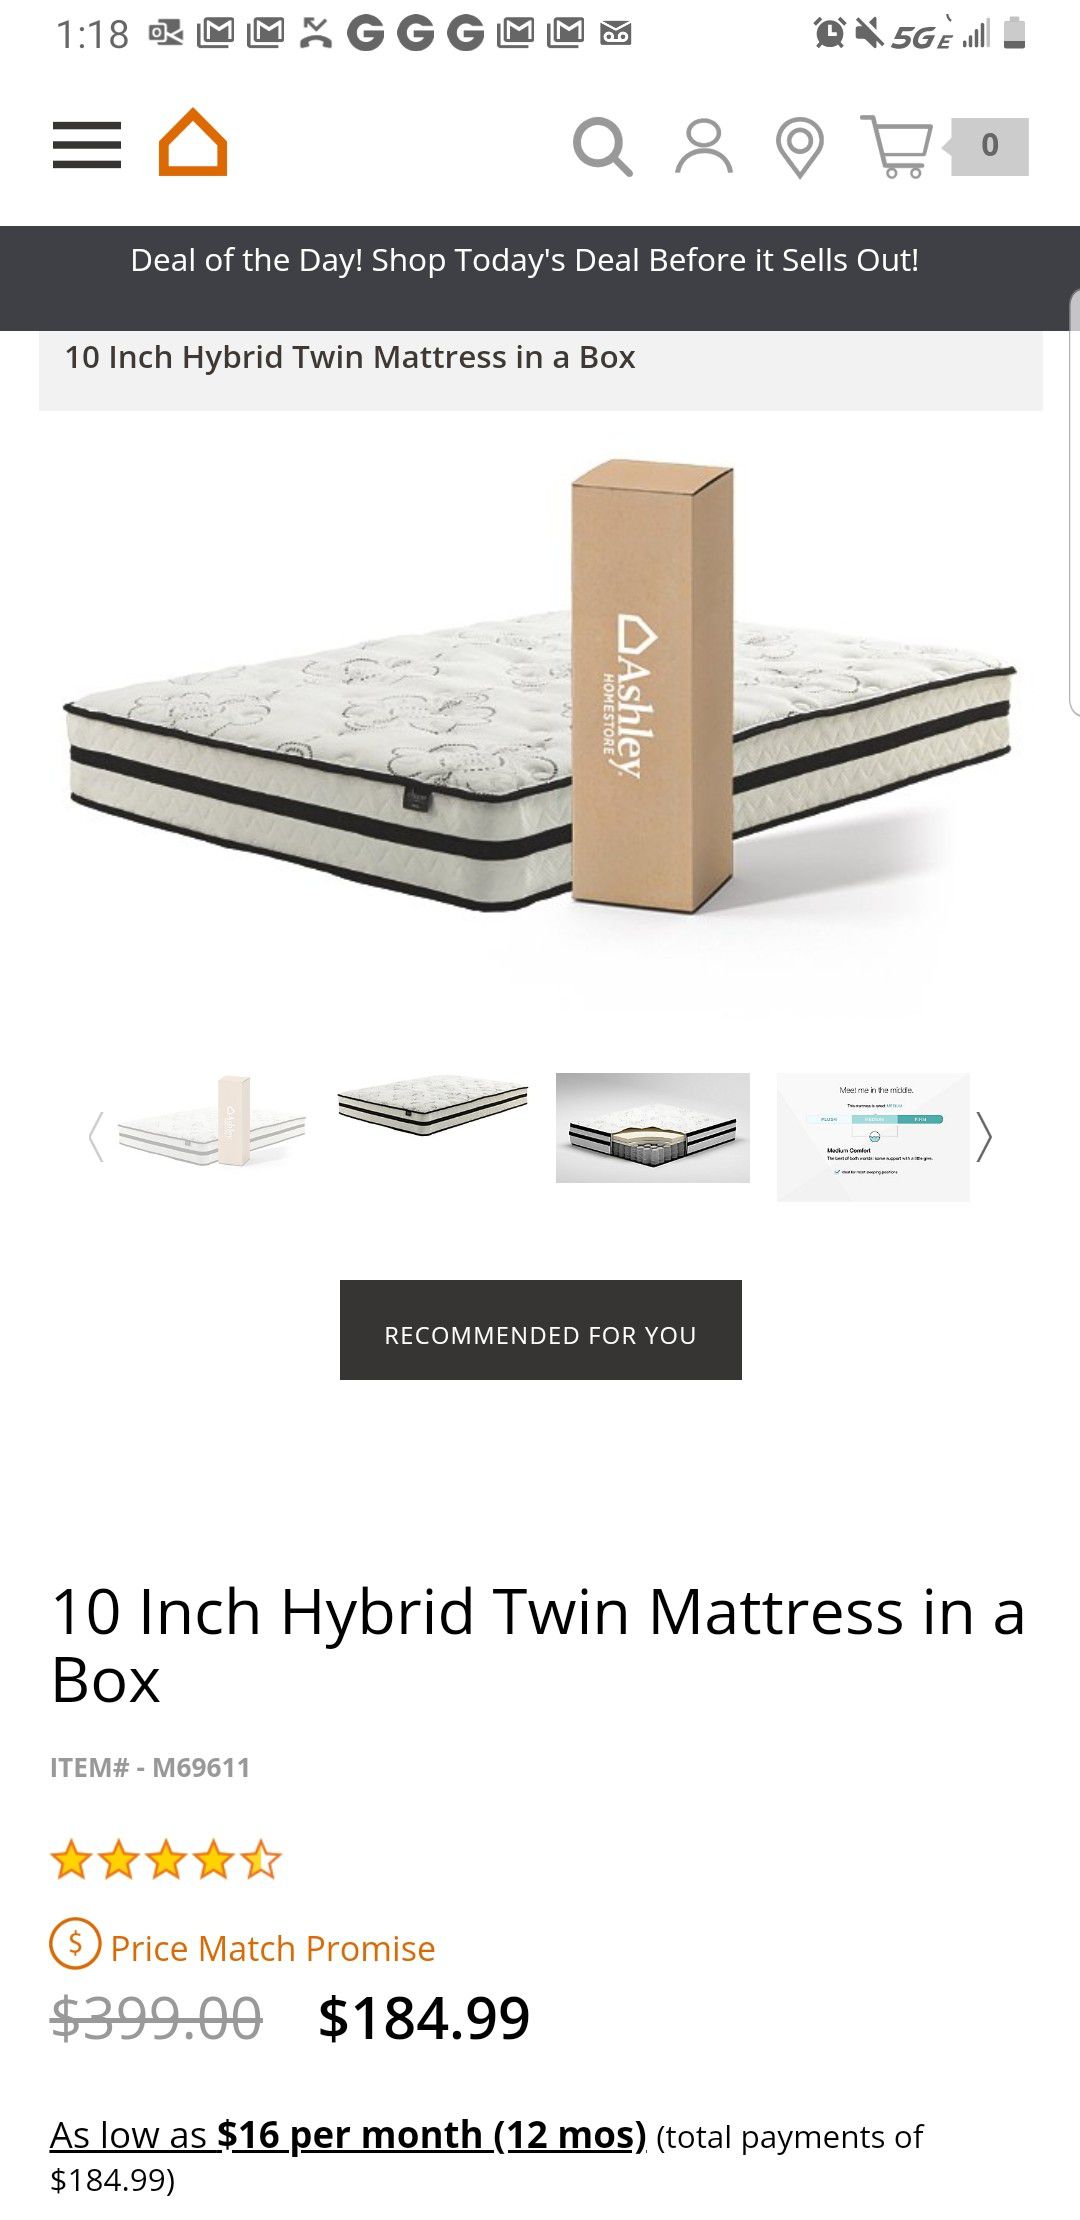 Brand New twin size 10 inch hybrid mattress in a box